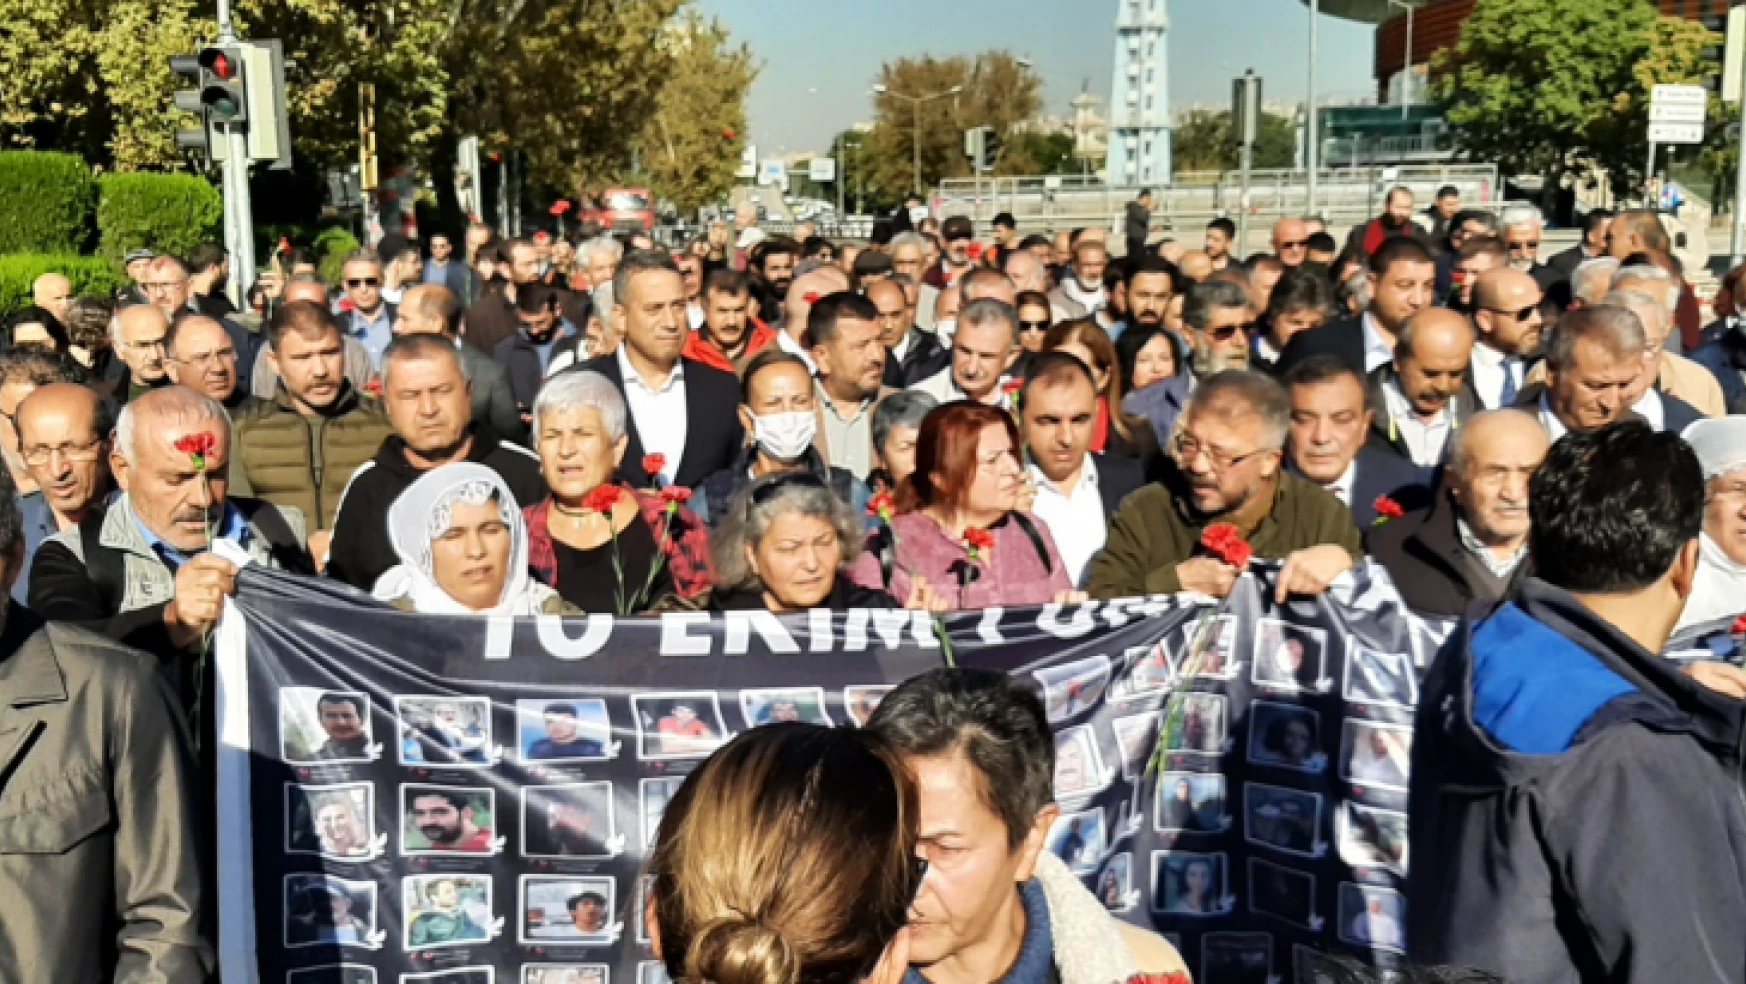 Ağbaba '10 Ekim Ankara Gar Katliamı insanlığa karşı işlenmiş bir suçtur. '